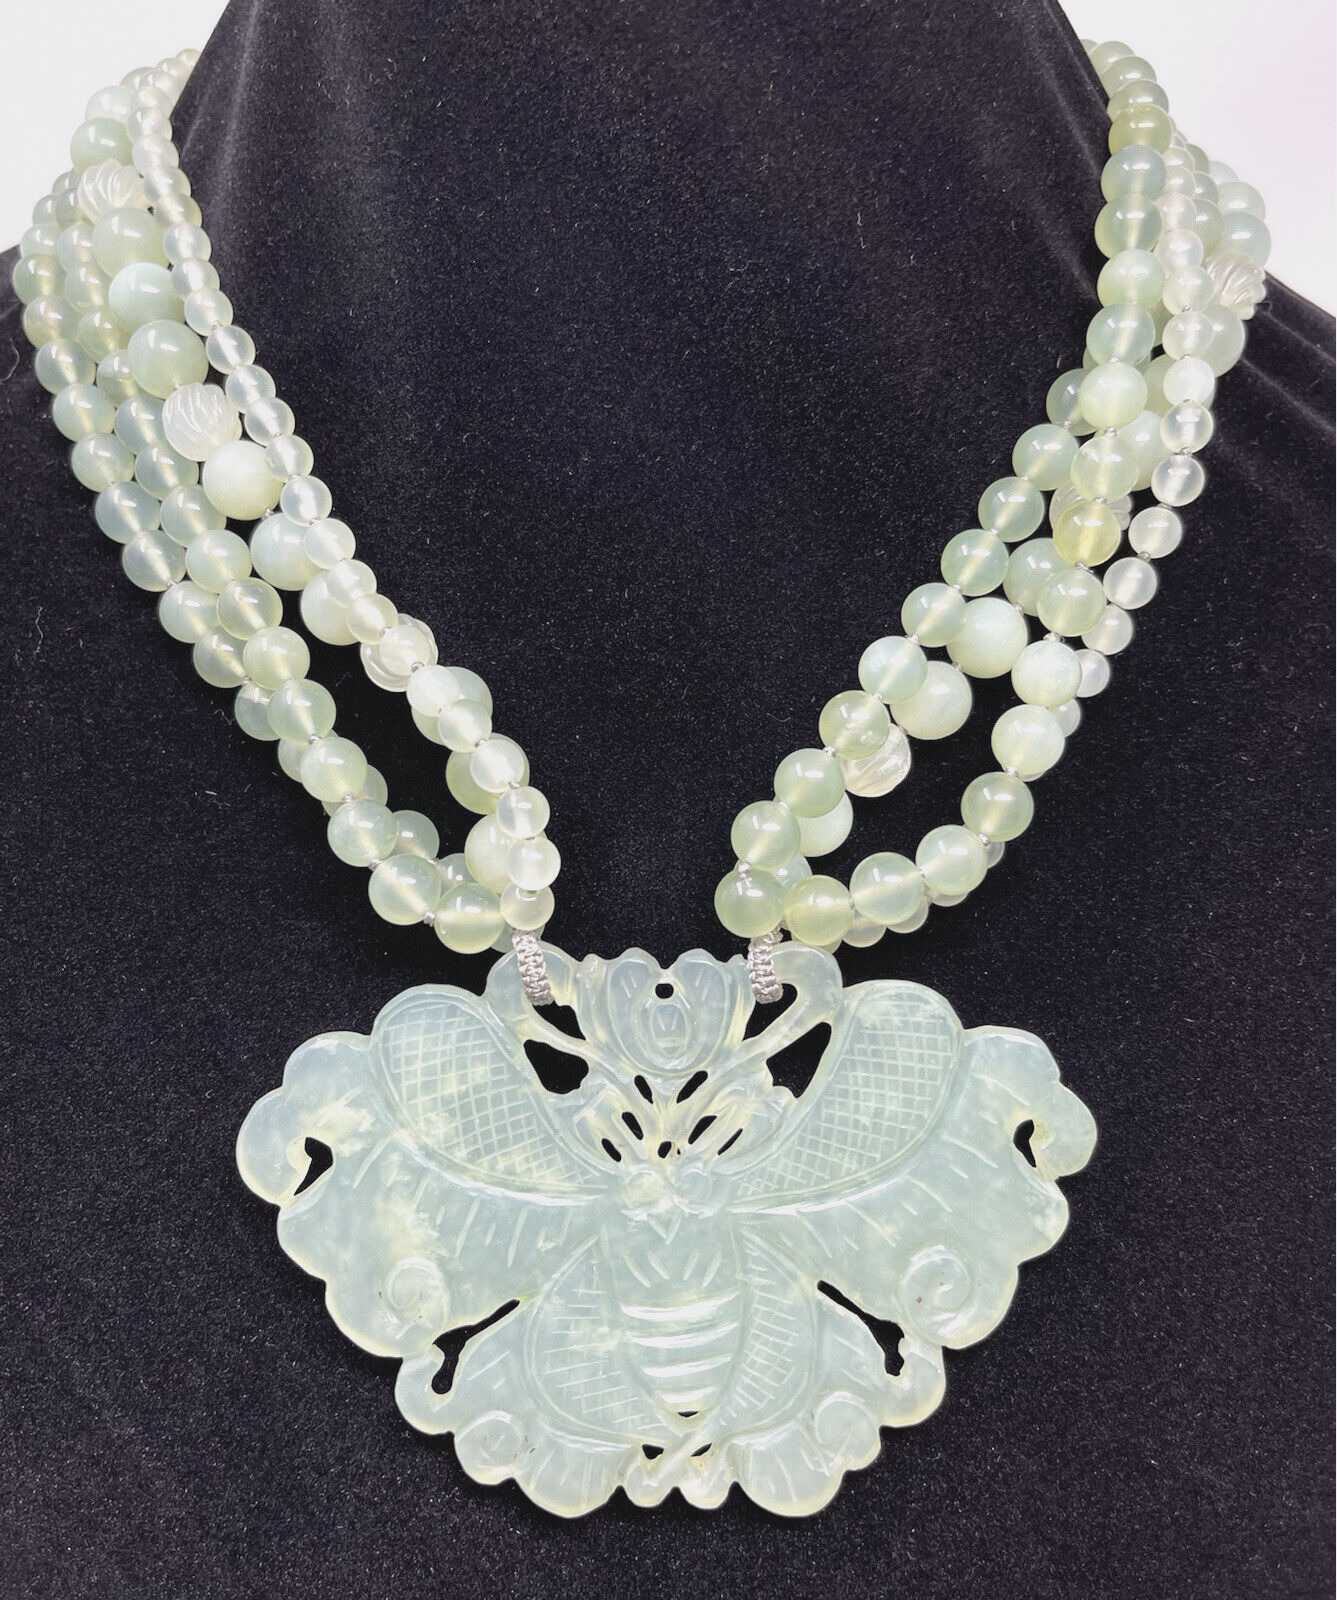 Chinese Jadeite Moth Pendant Necklace Silk Cord